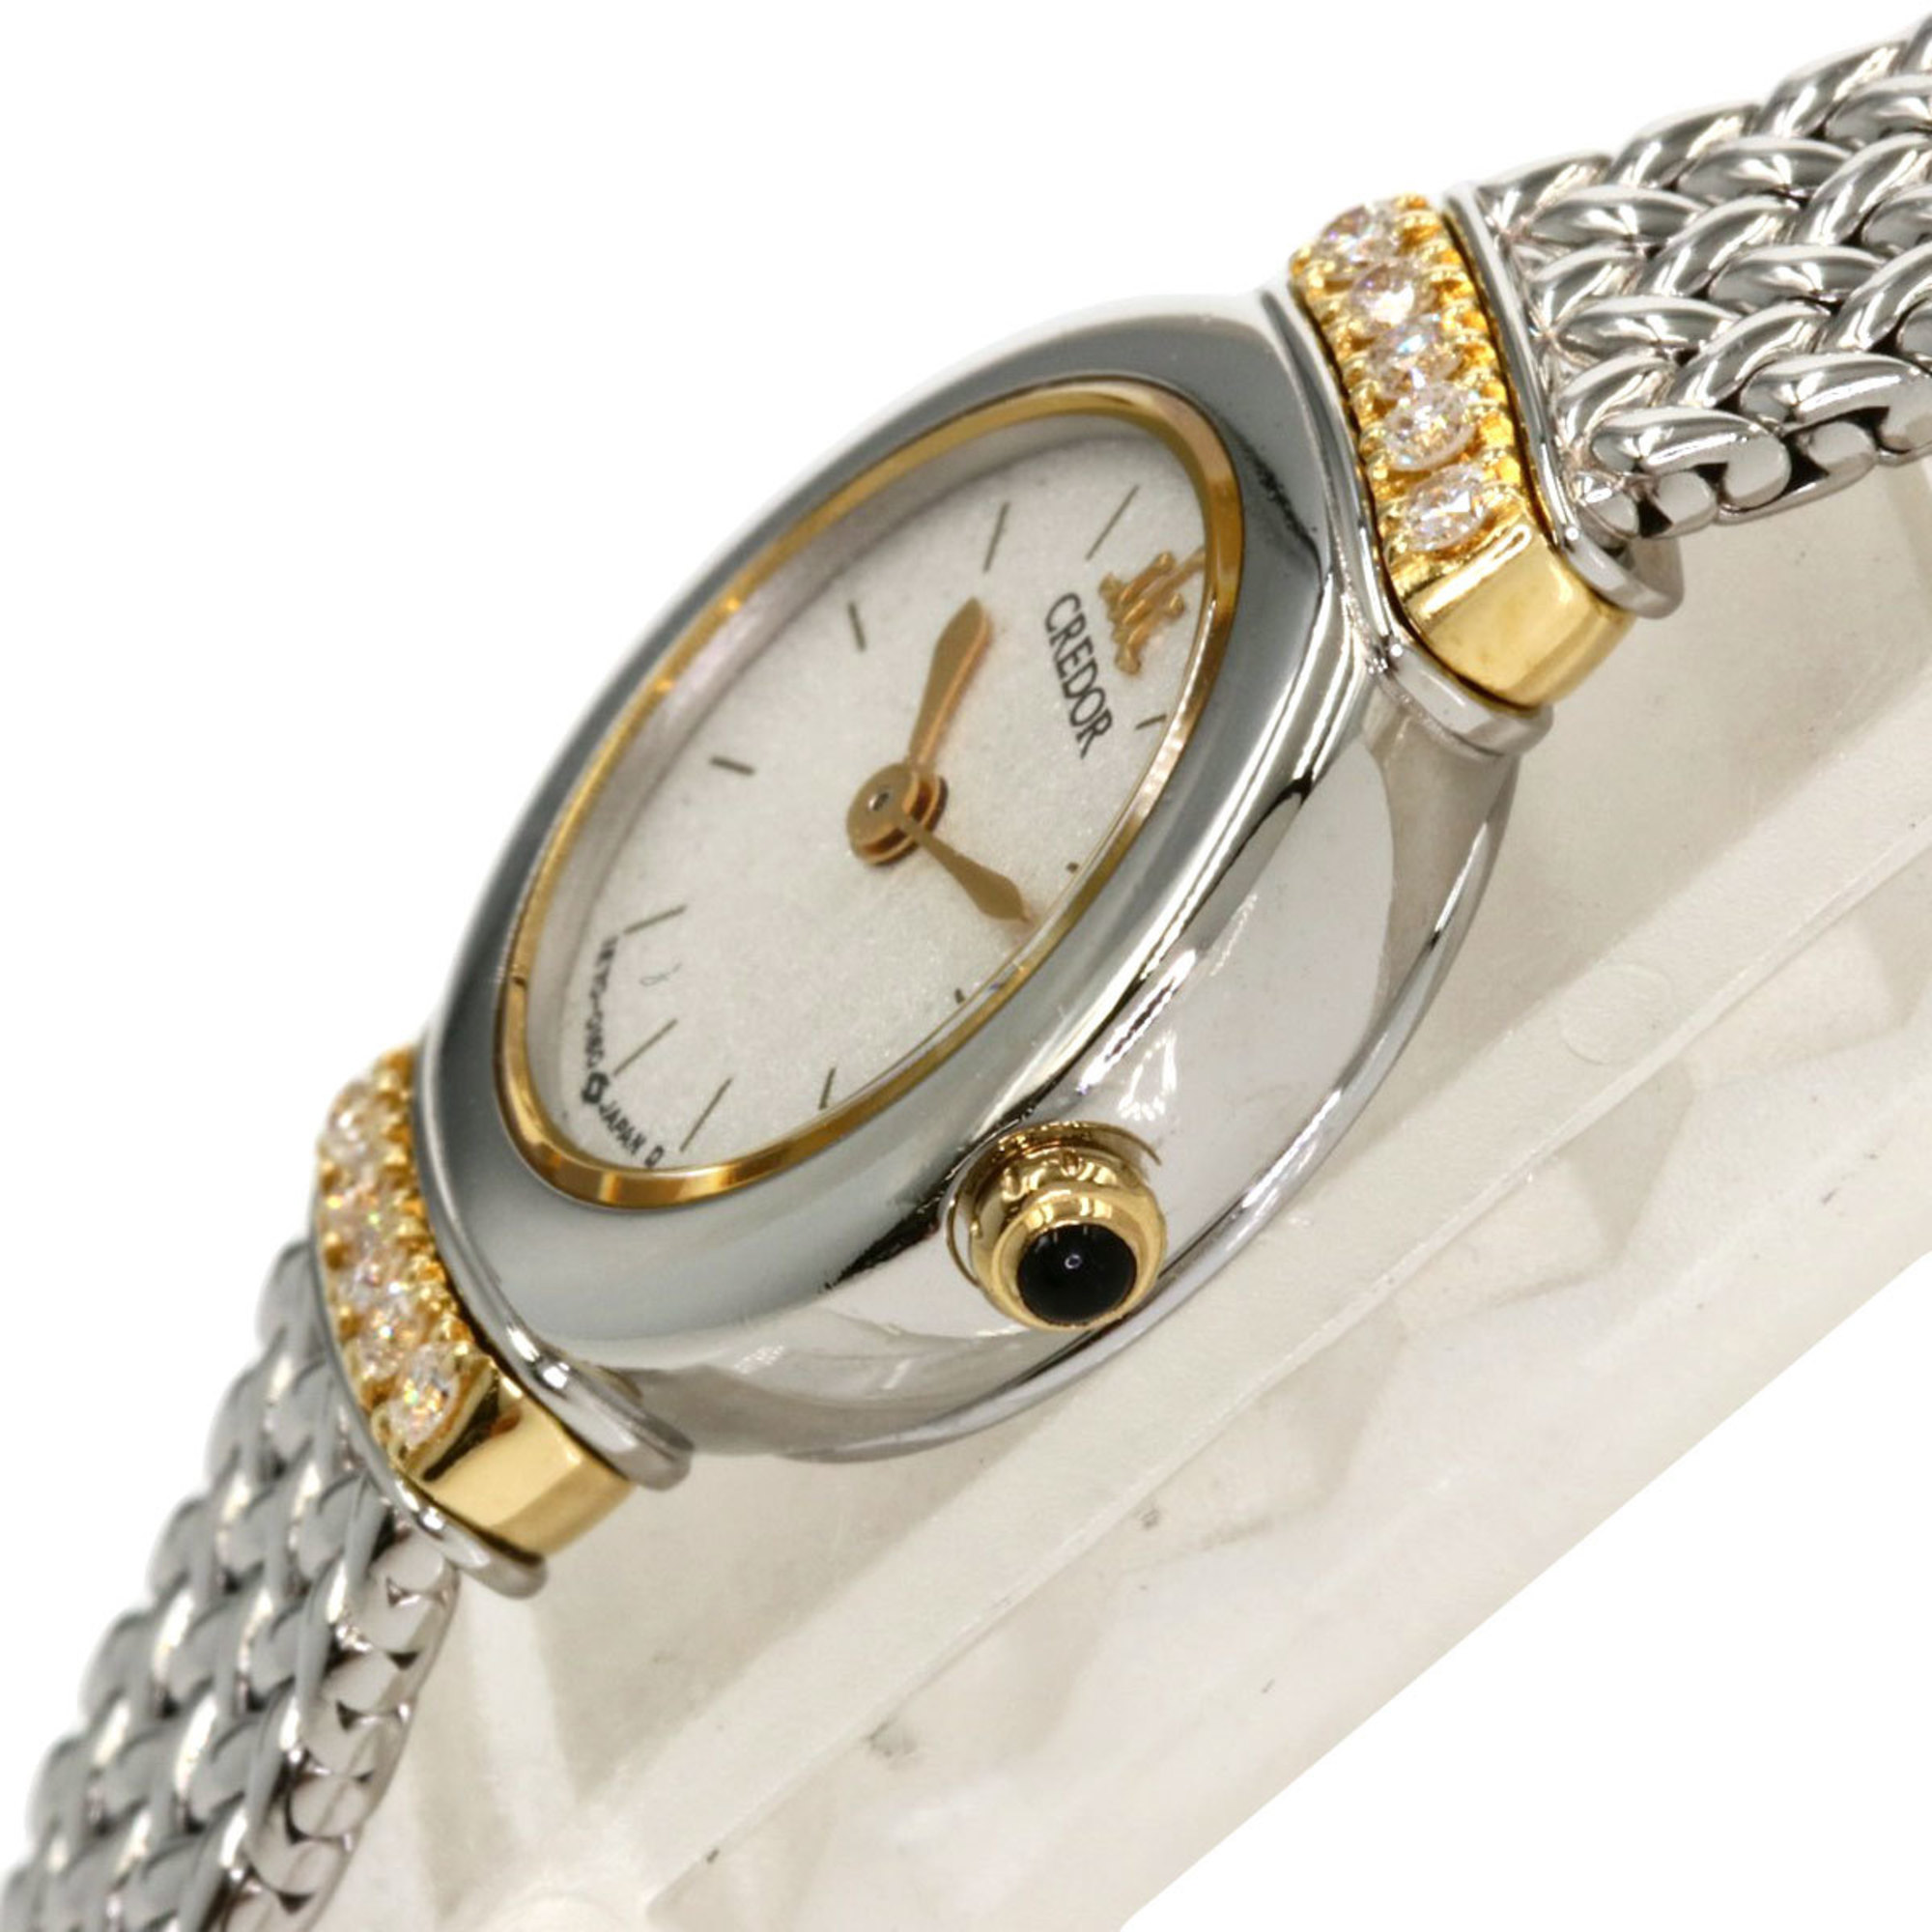 Seiko GKTE010 1E70-0100 Credor lug diamond watch stainless steel SS ladies SEIKO